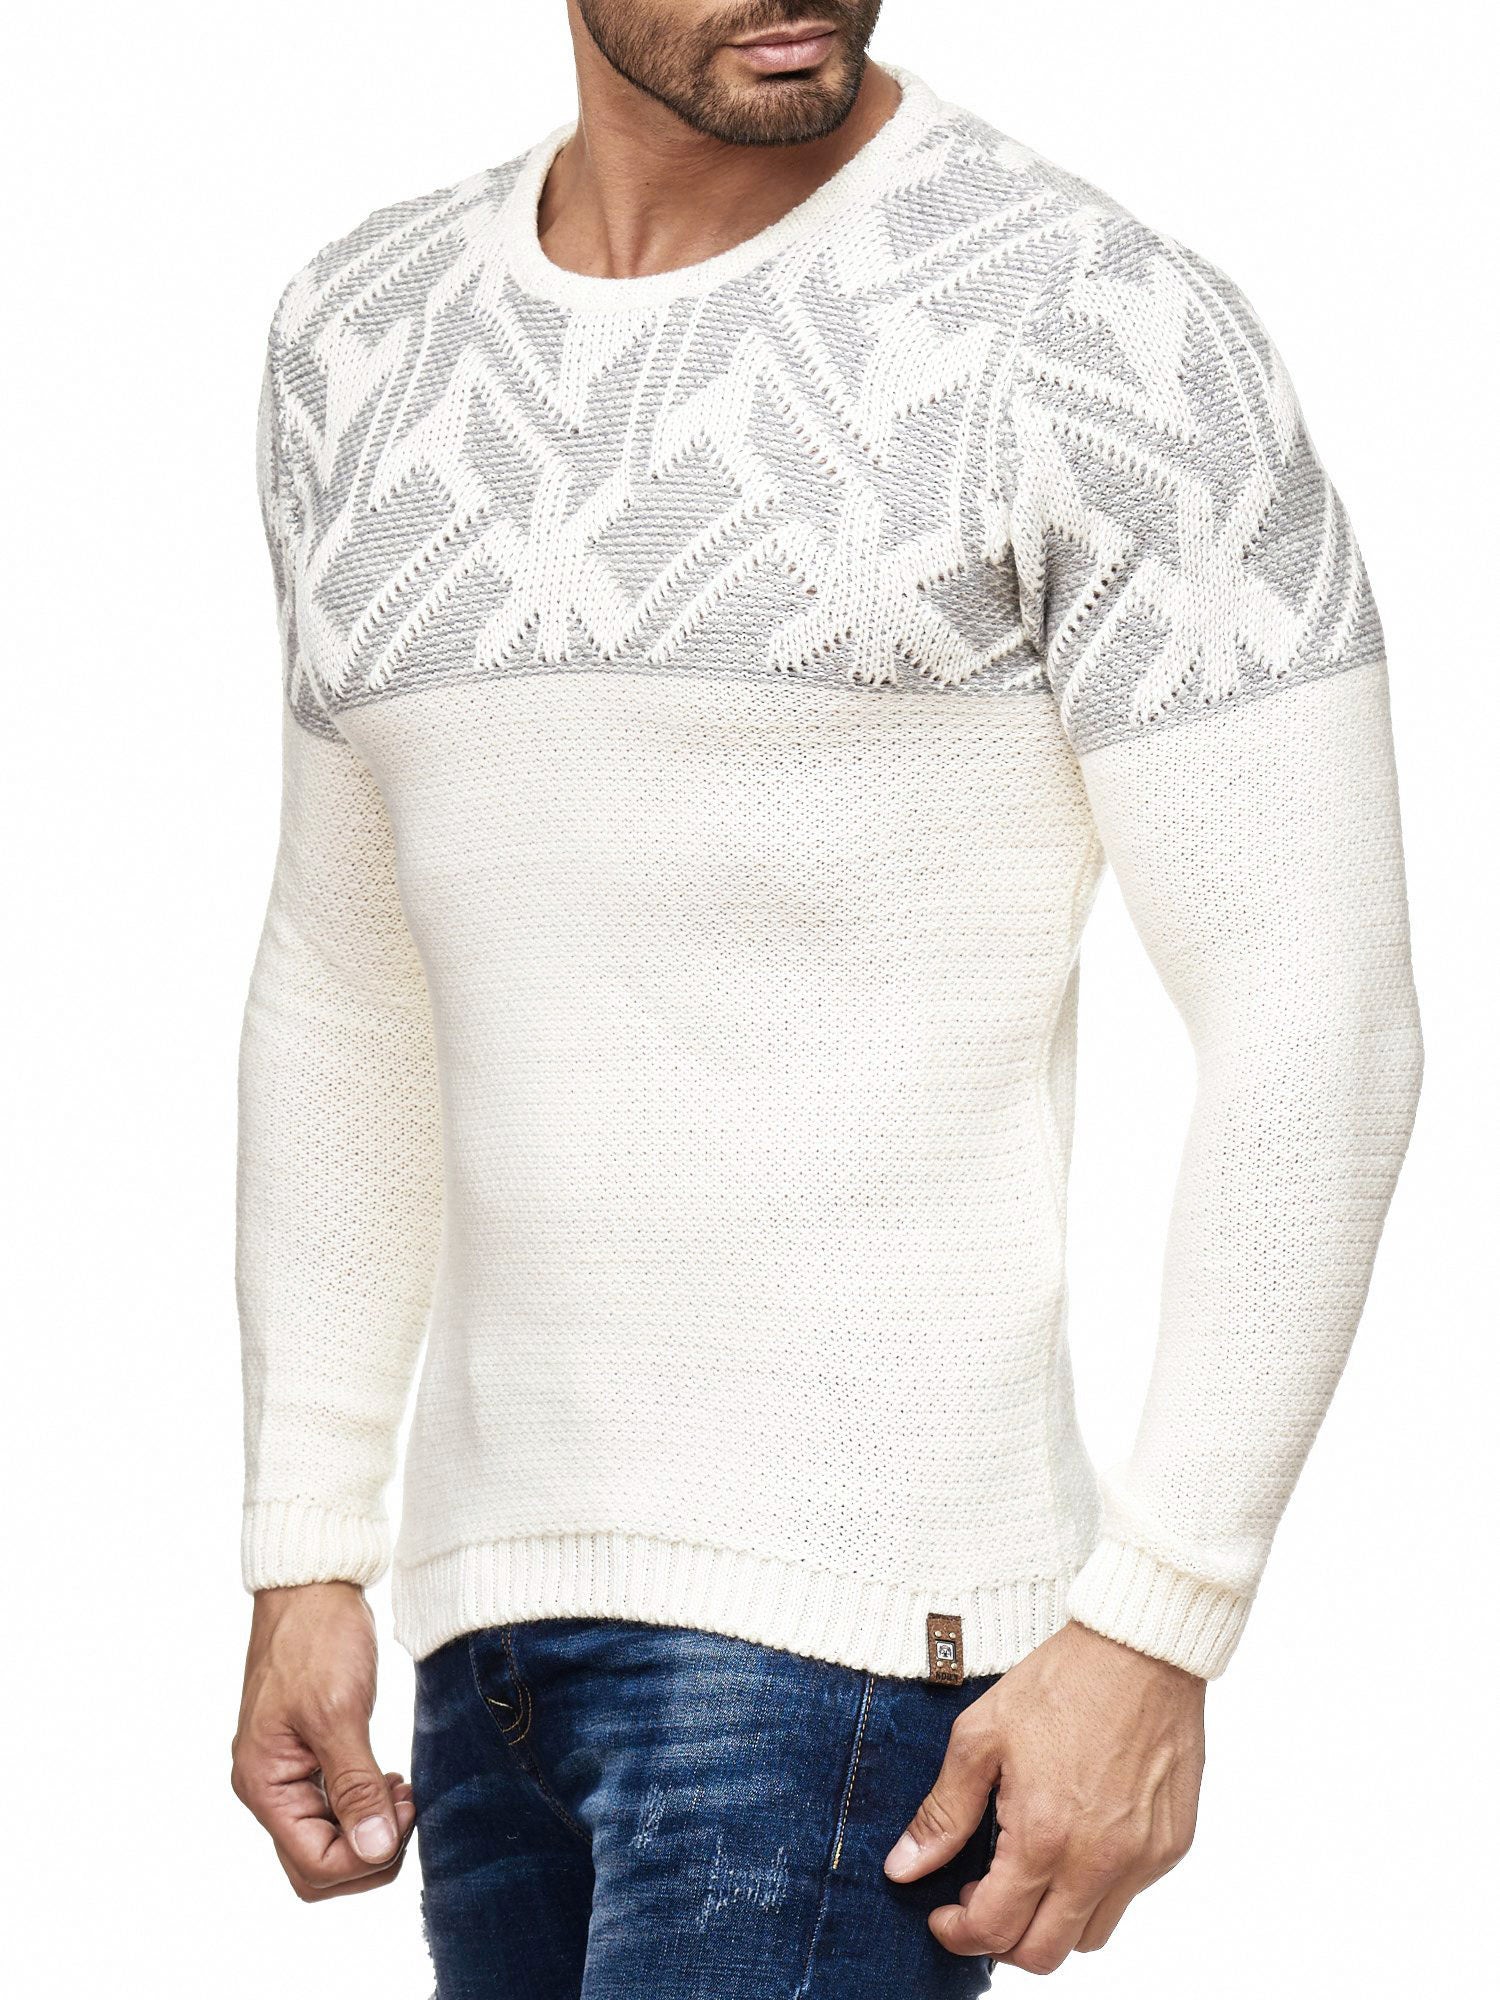 K&D Men Stylish Maze Top Pullover Sweater - Cream - FASH STOP